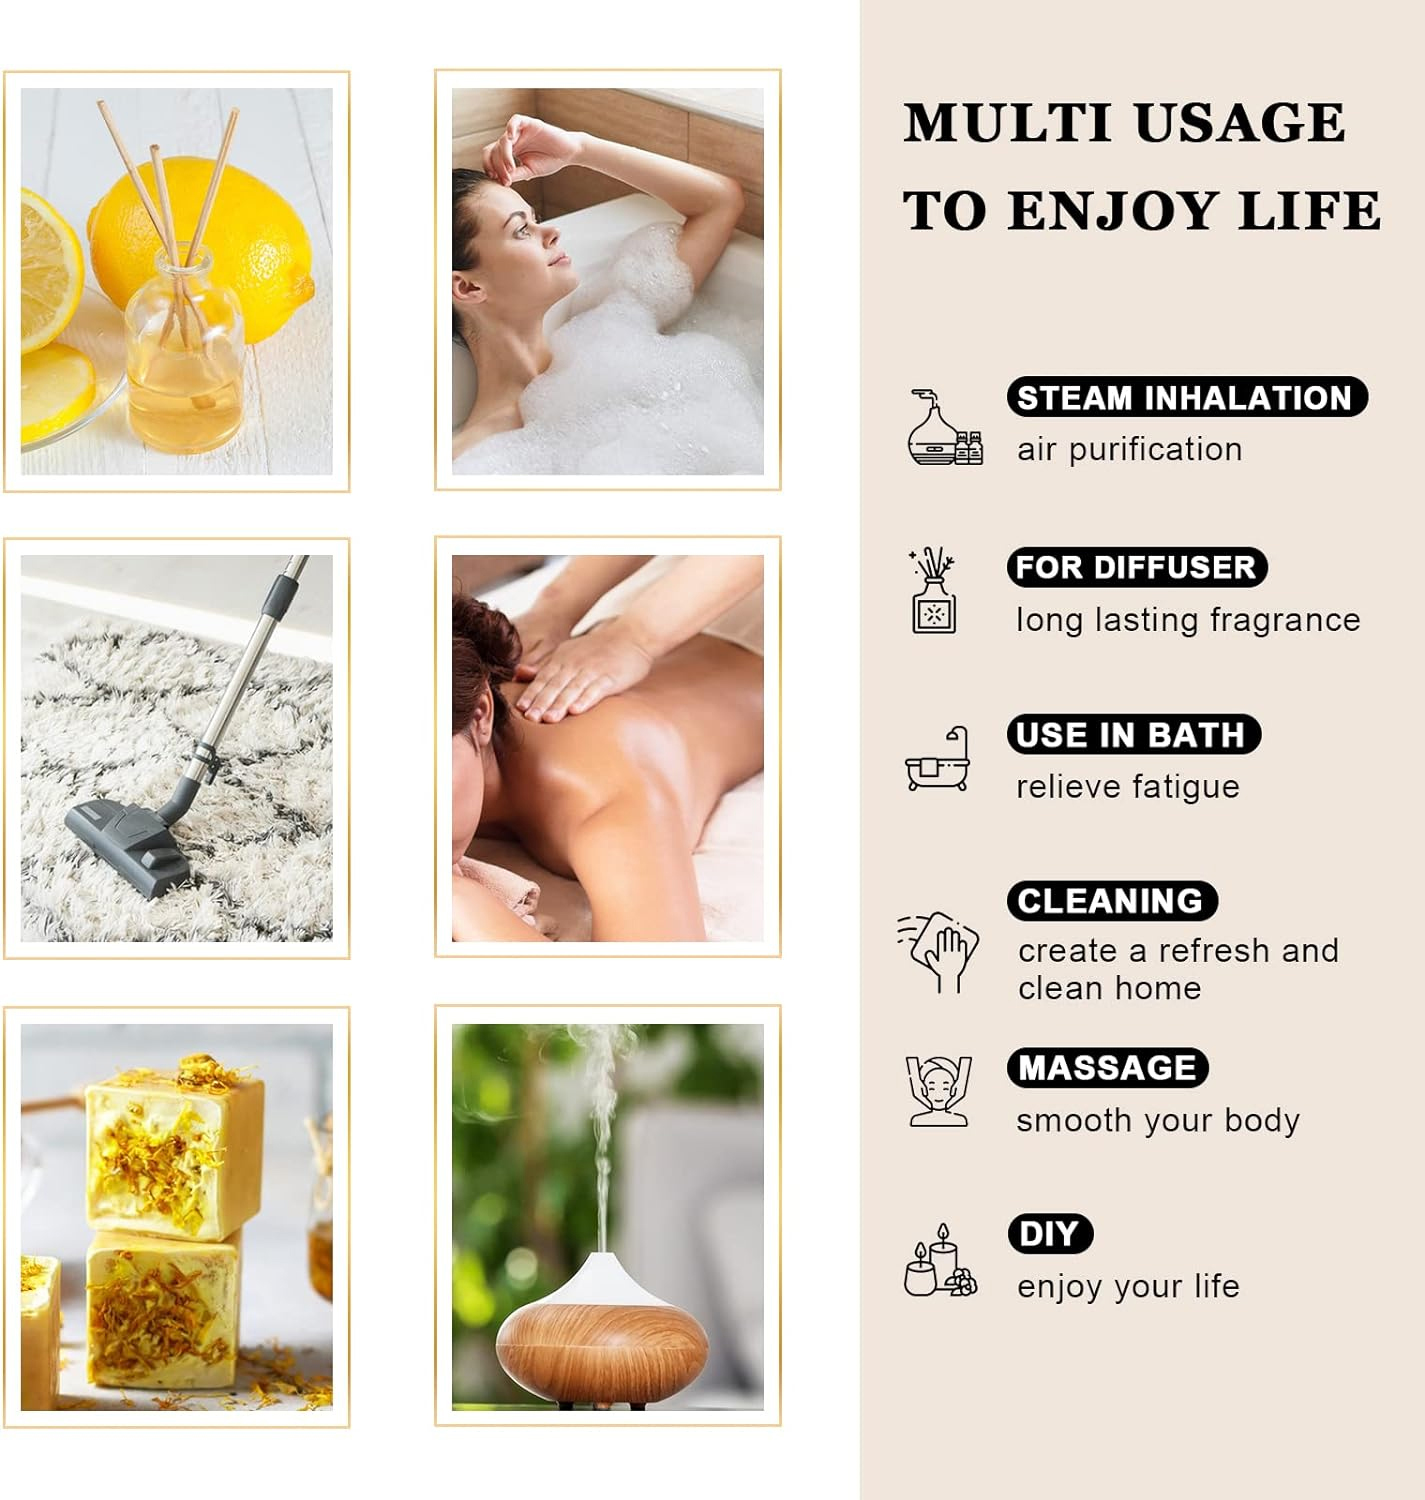 Bulk wholesale 100% Organic Finest Quality Pure Essential Oil Marjoram Essential Oil cosmetic grade for skin care